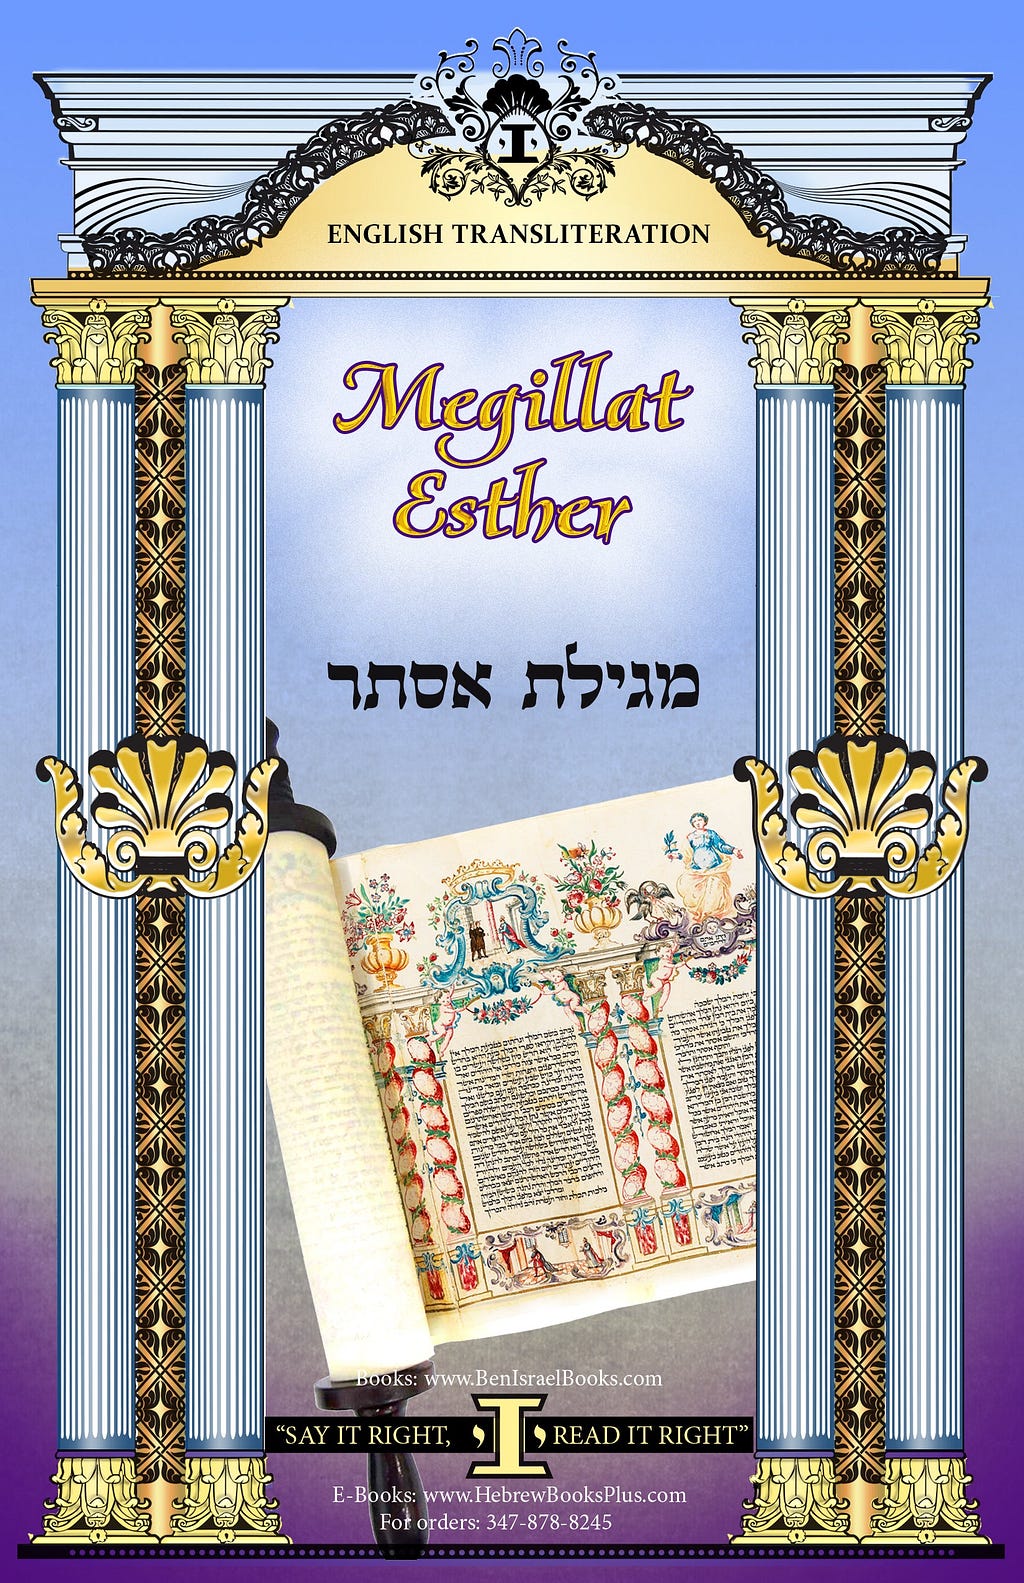 Megillat Esther in English Transliteration